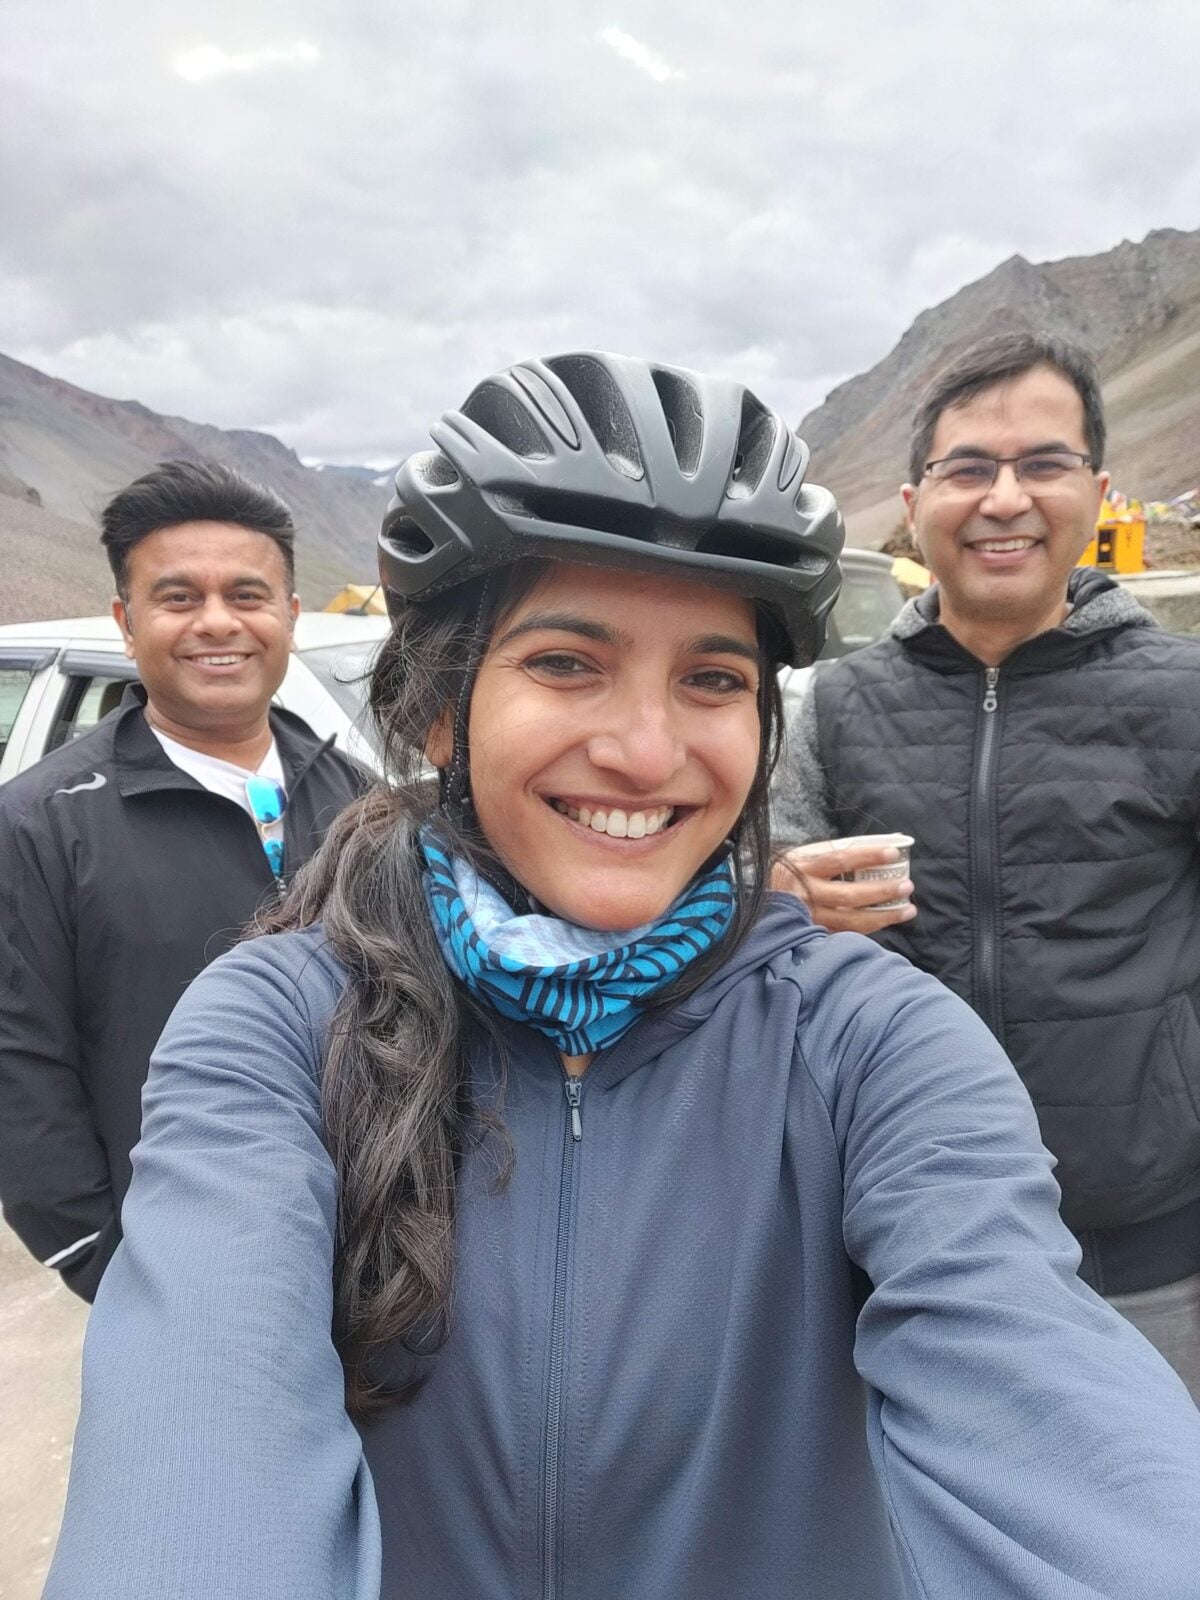 Pashmina wearing her cycling helmet, posing between two men.